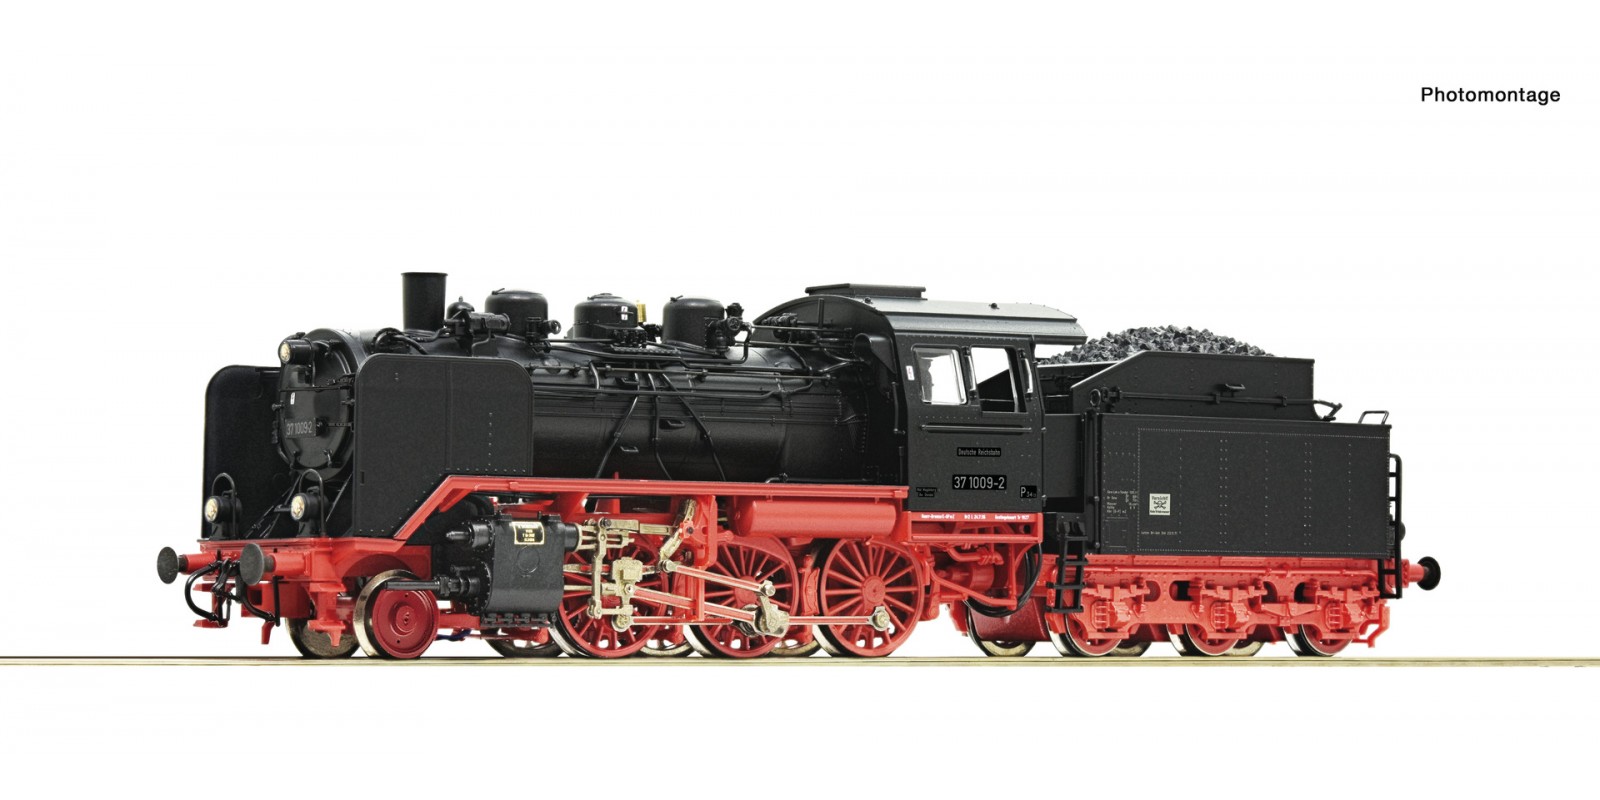 RO79212 Steam locomotive 37 1009-2